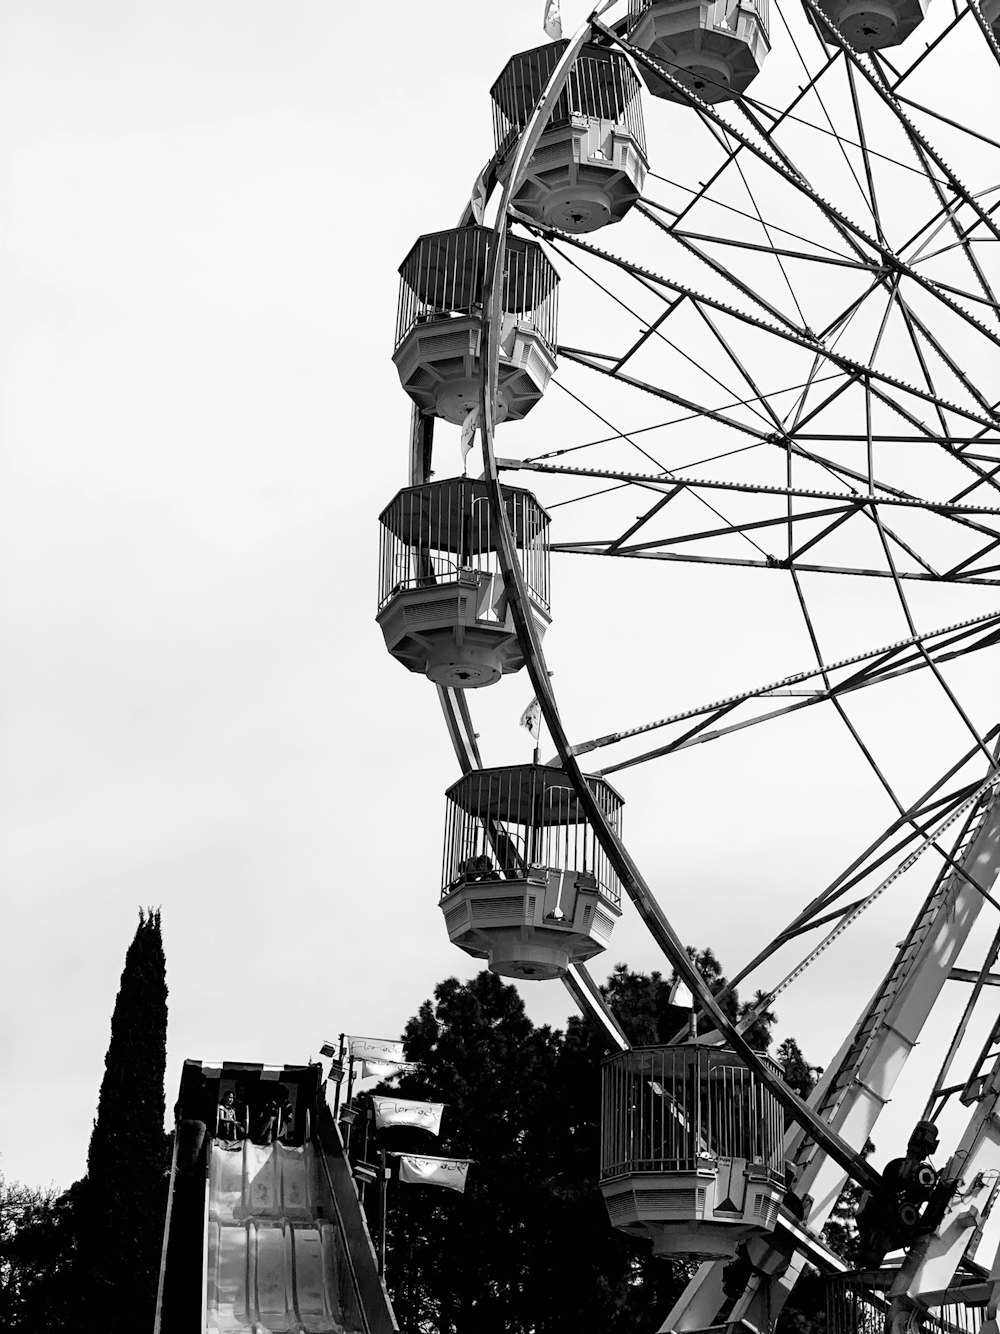 grayscale photo of a Ferris Wheel